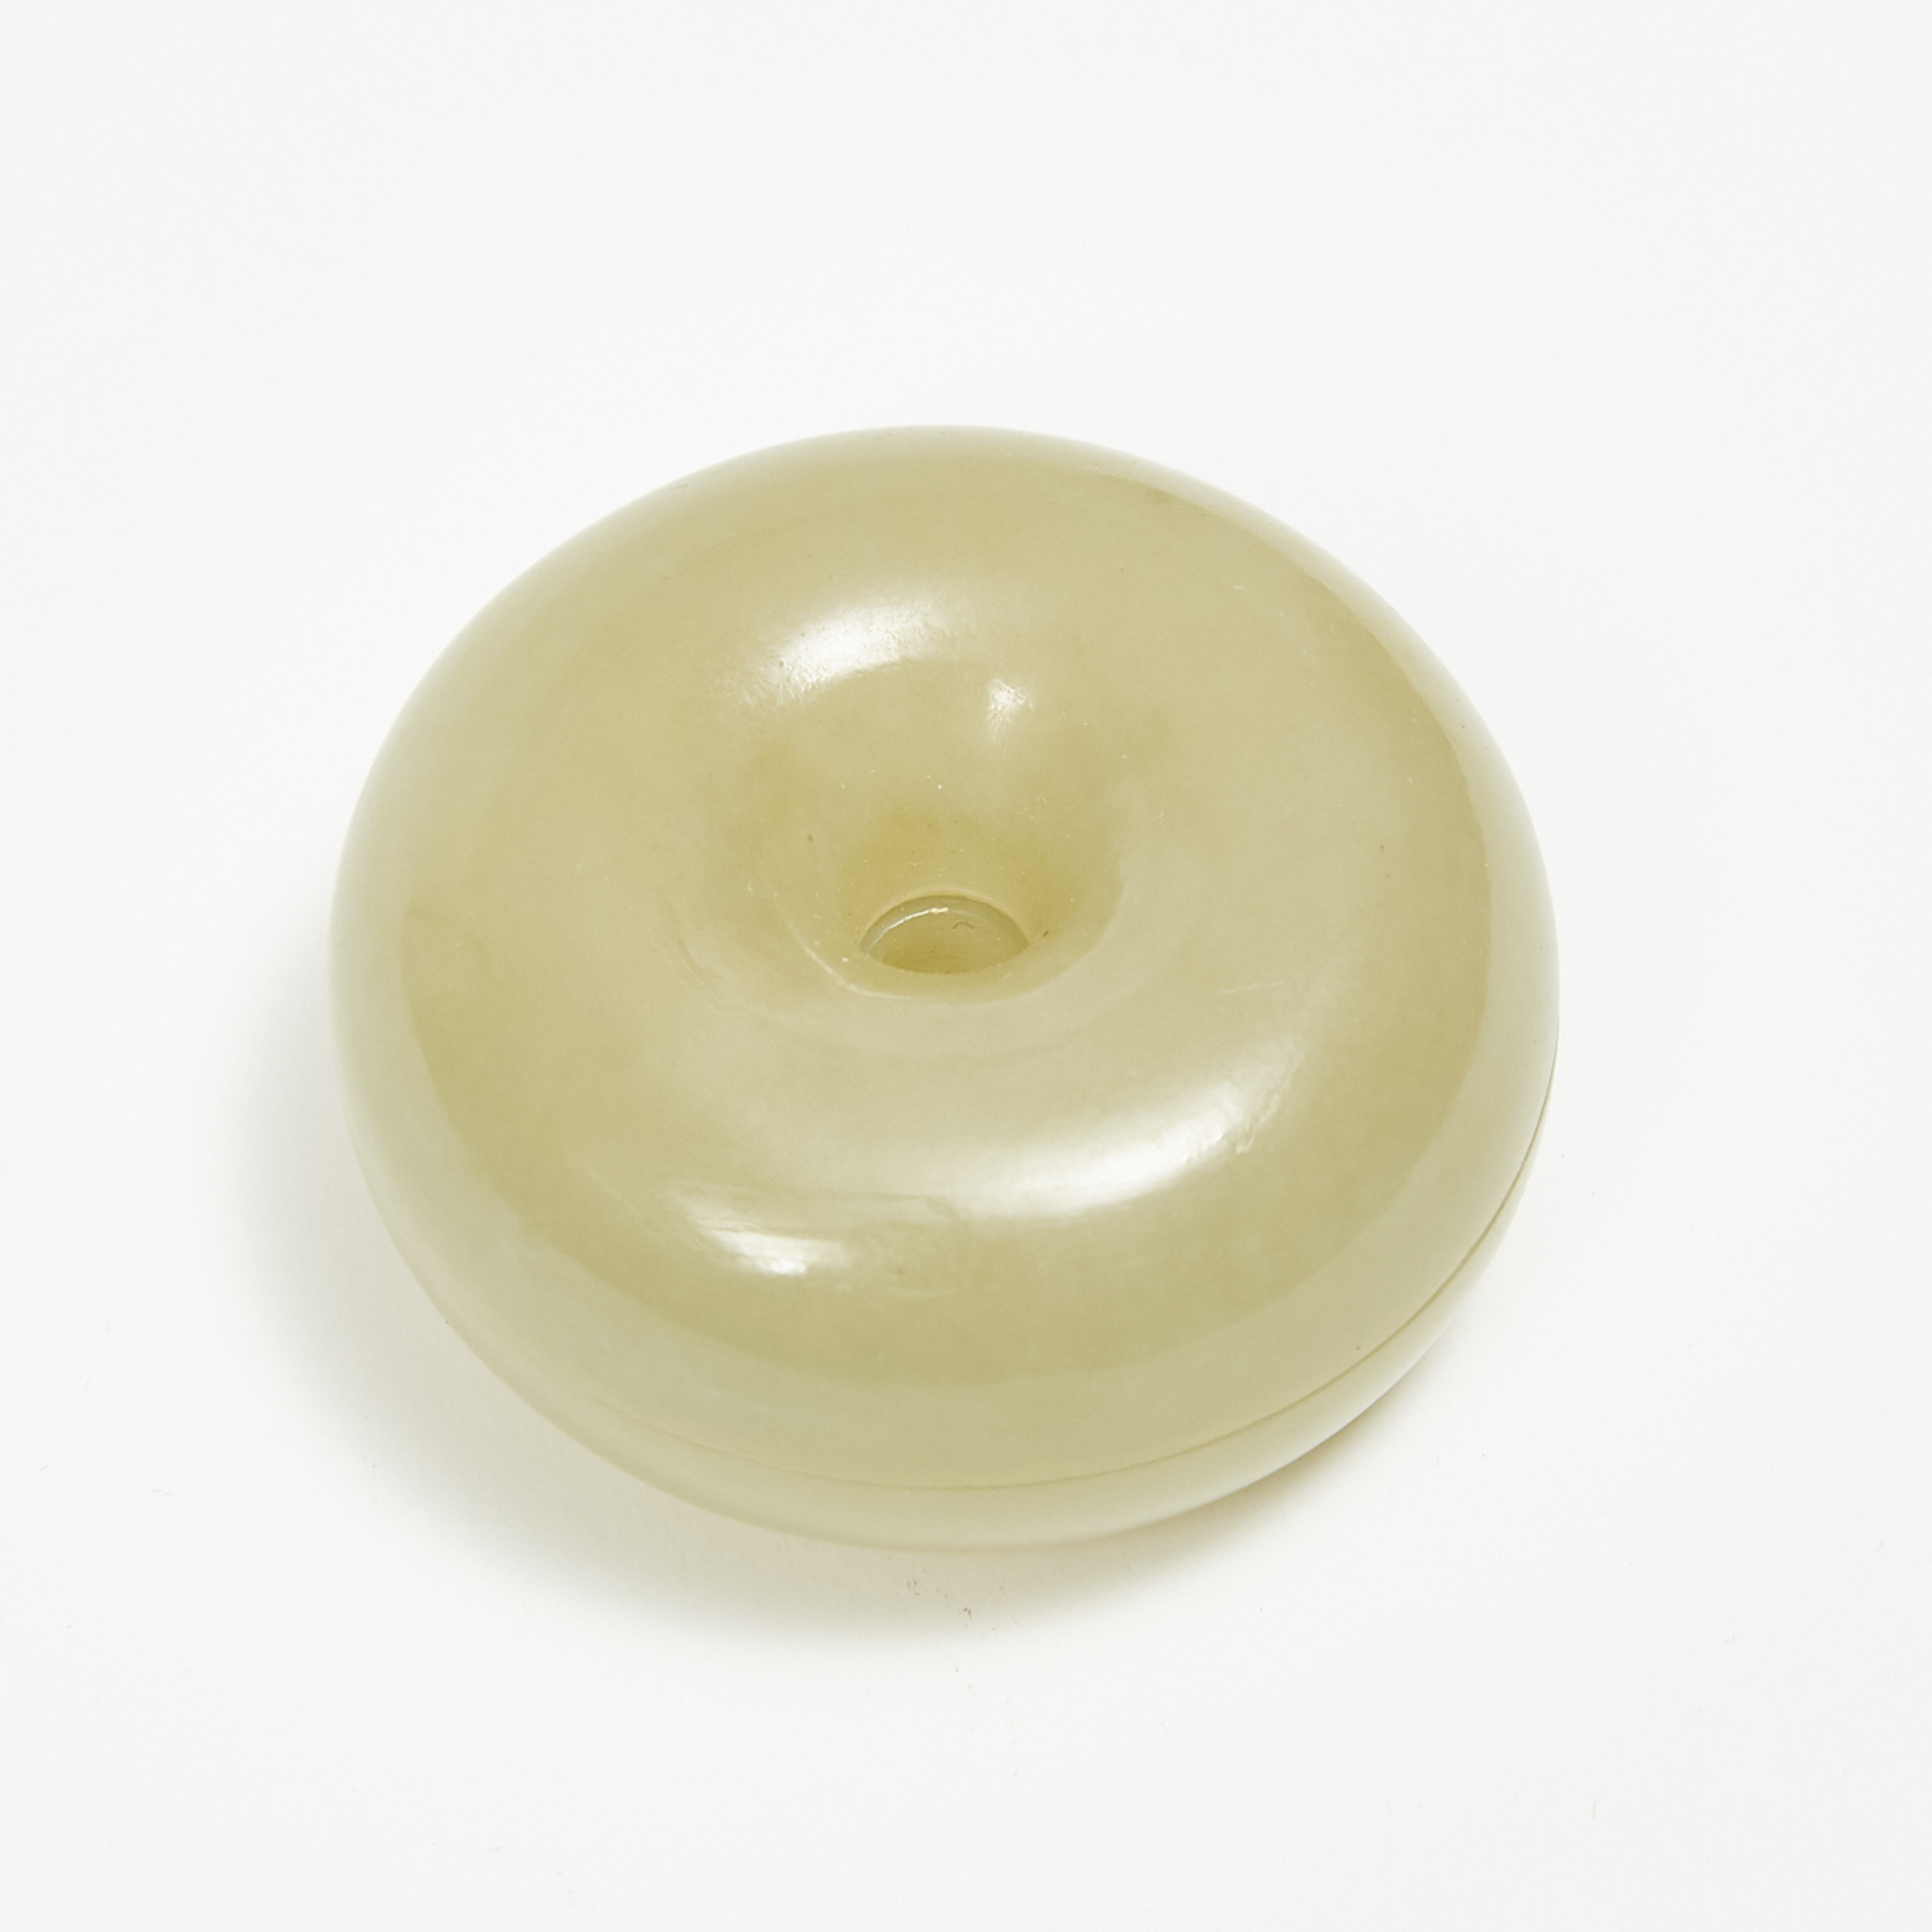 A Fine Small Round Shaped Celadon Jade Box